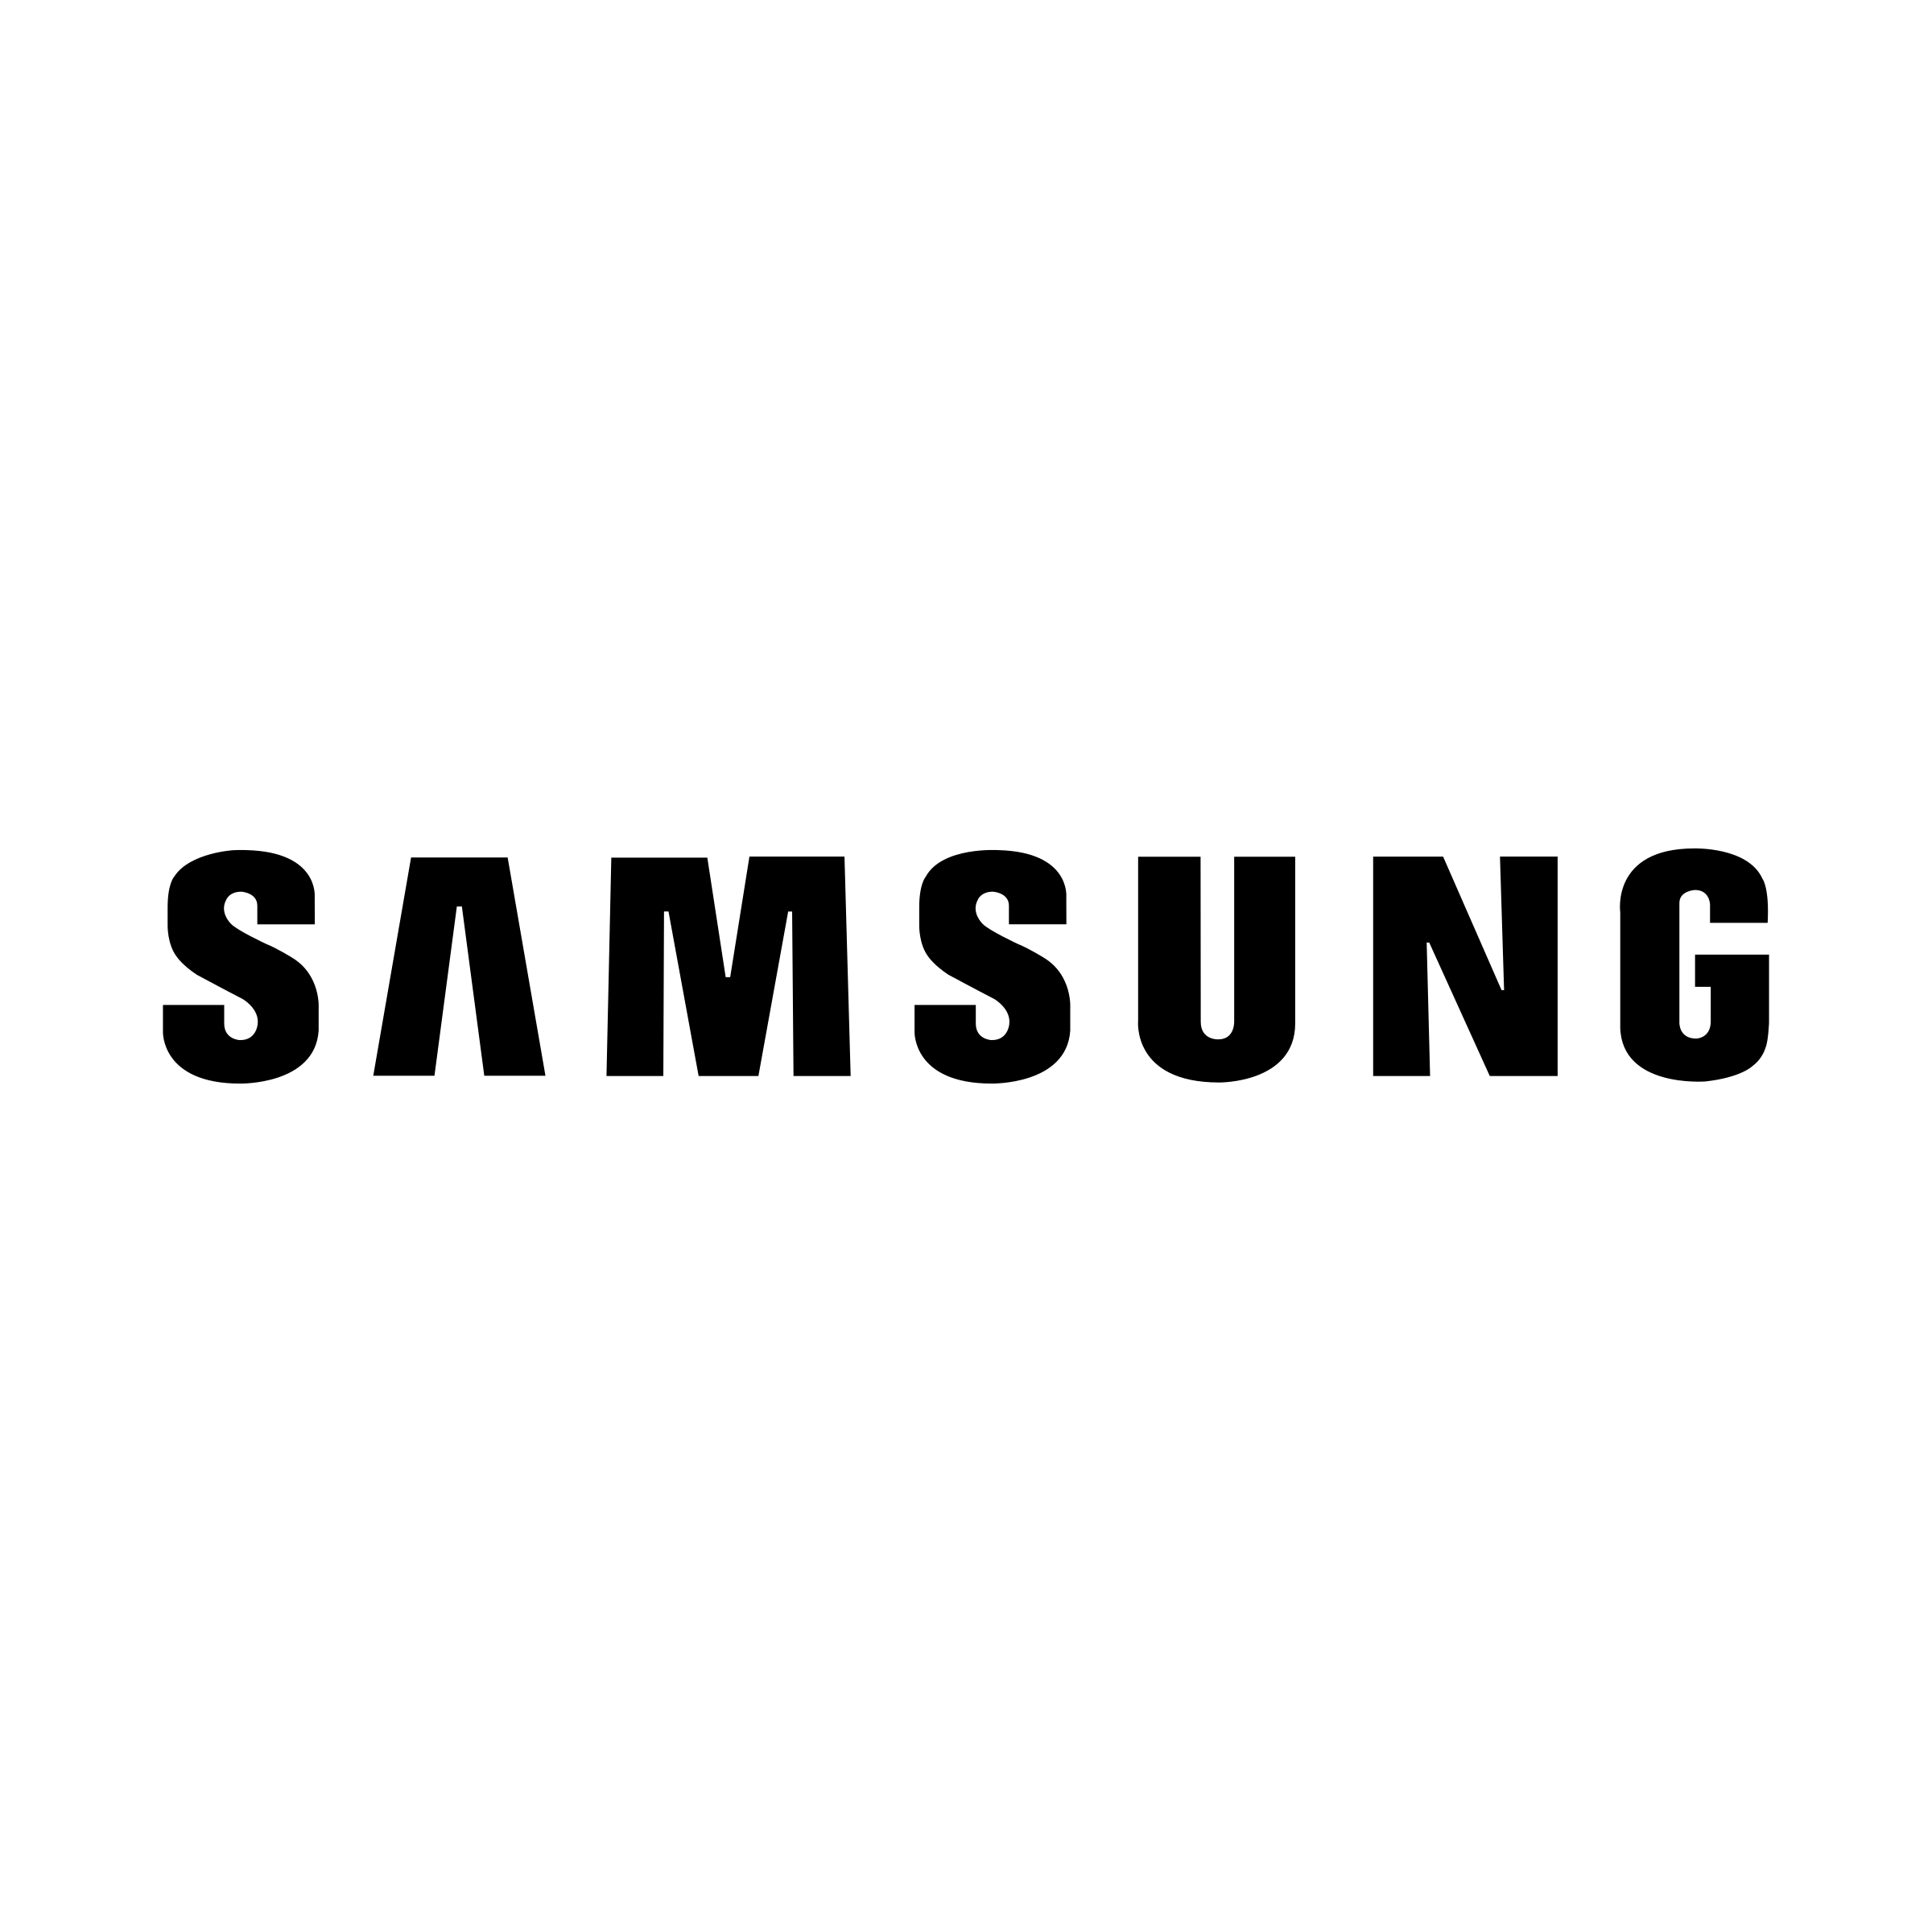 Samsung White Logo - Samsung Logo PNG Transparent & SVG Vector - Freebie Supply